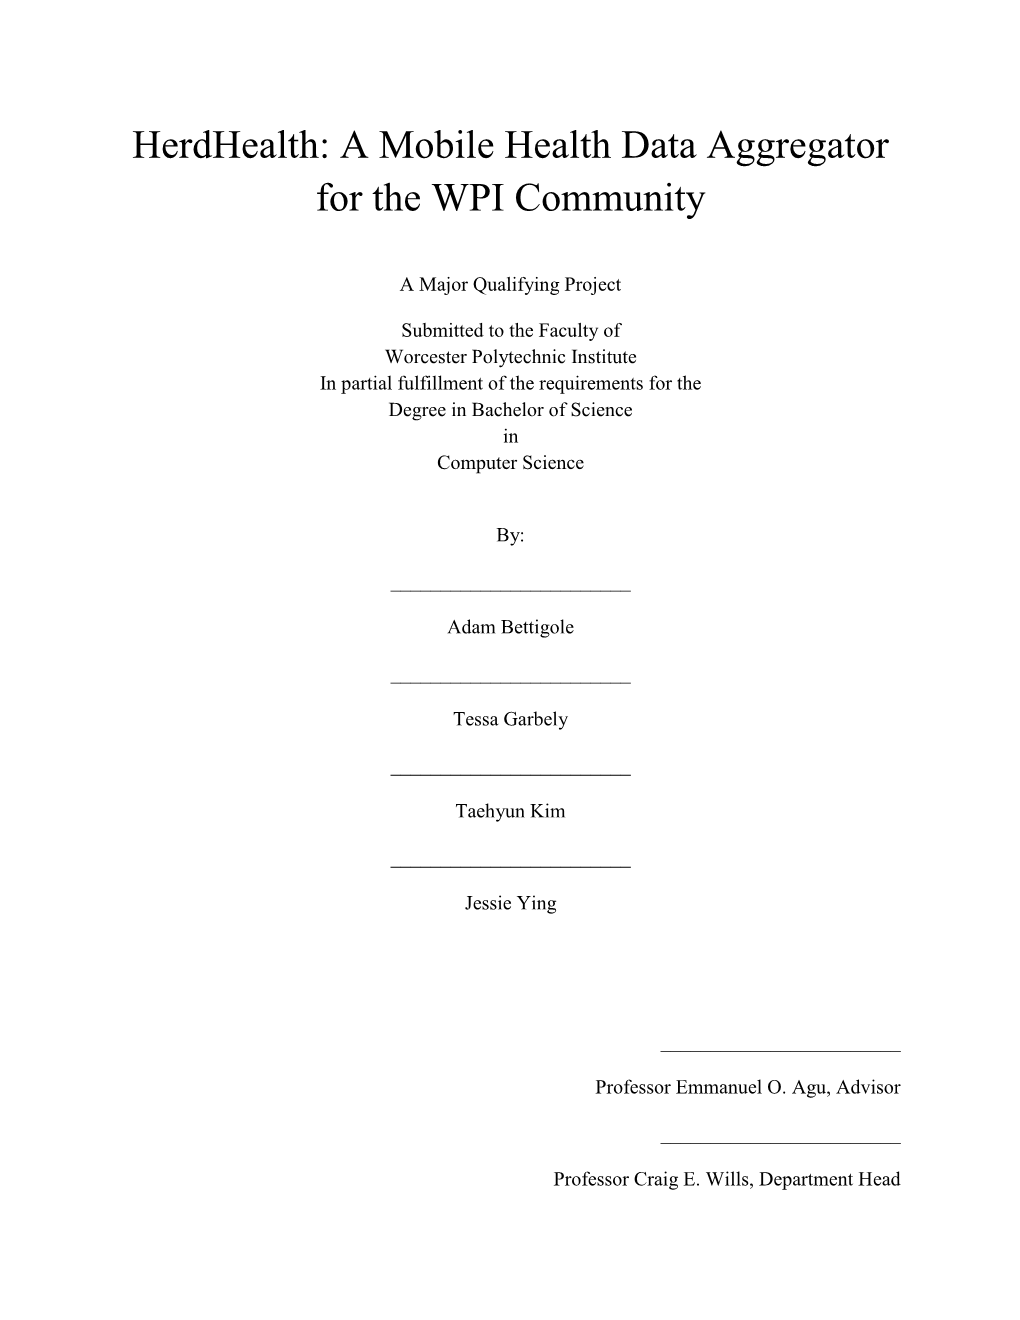 A Mobile Health Data Aggregator for the WPI Community